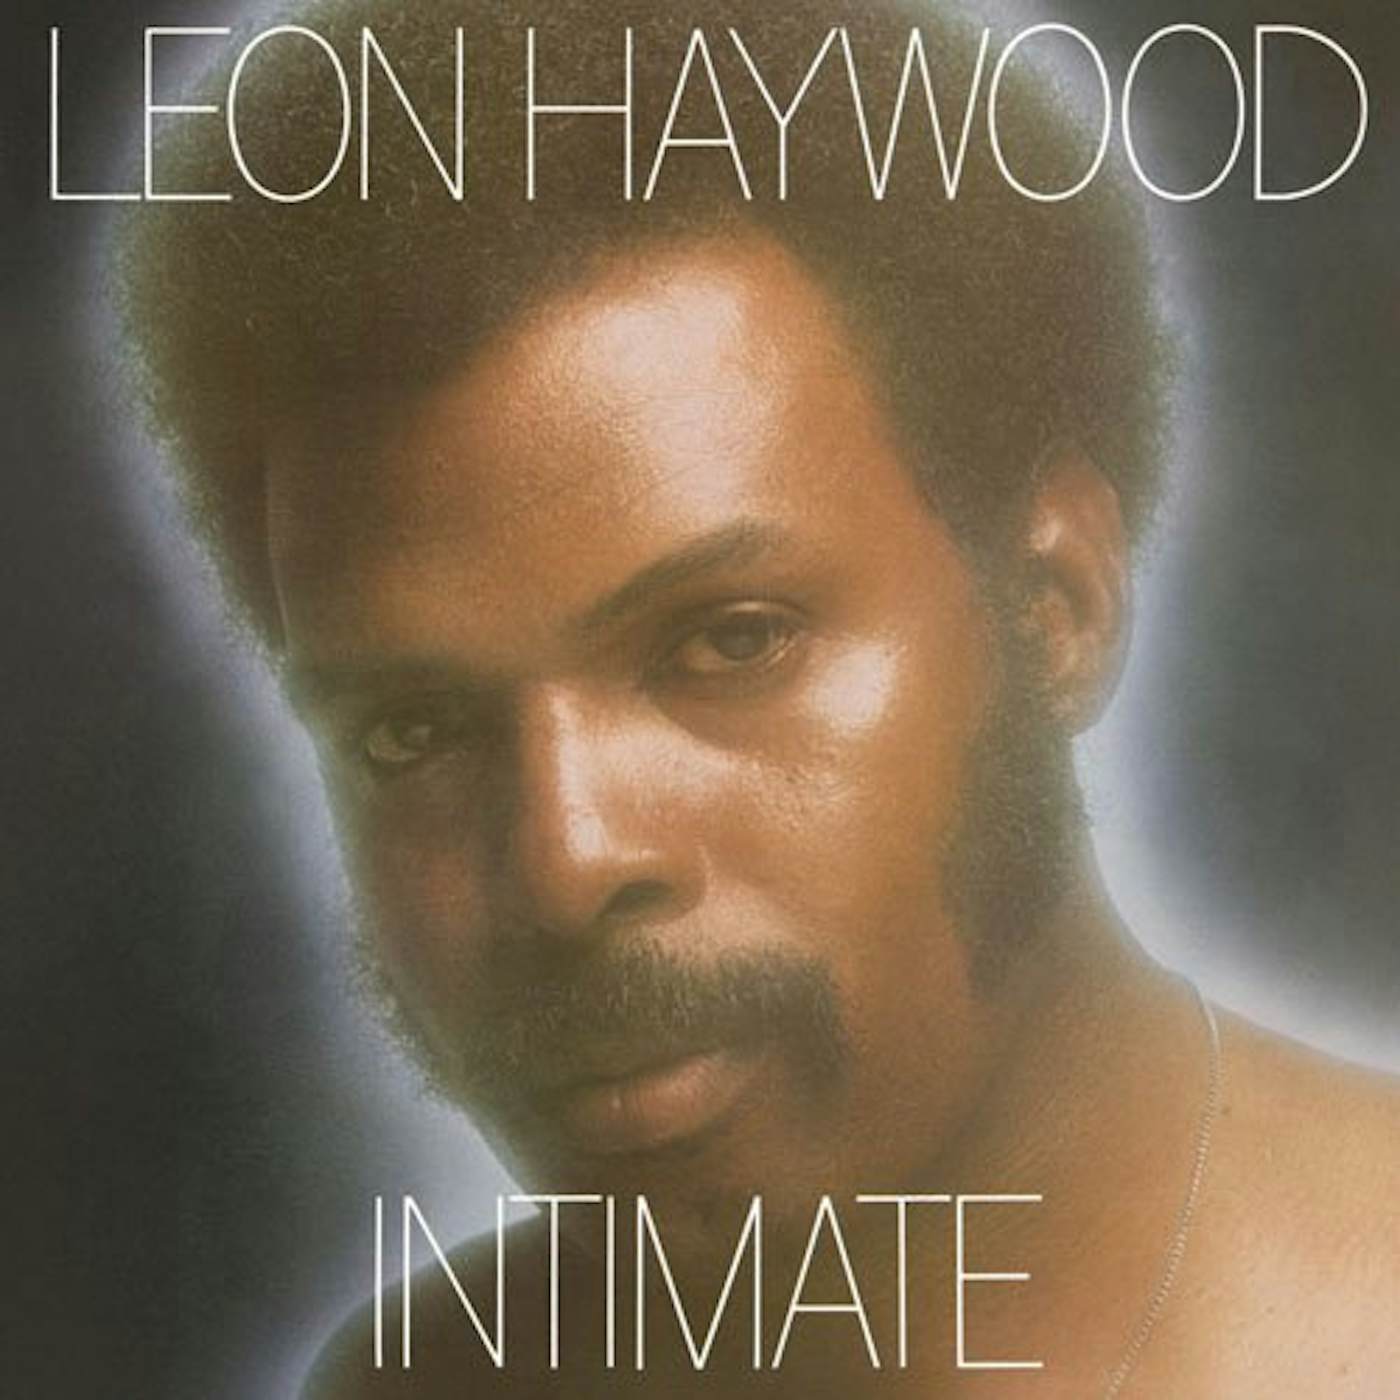 Leon Haywood INTIMATE CD